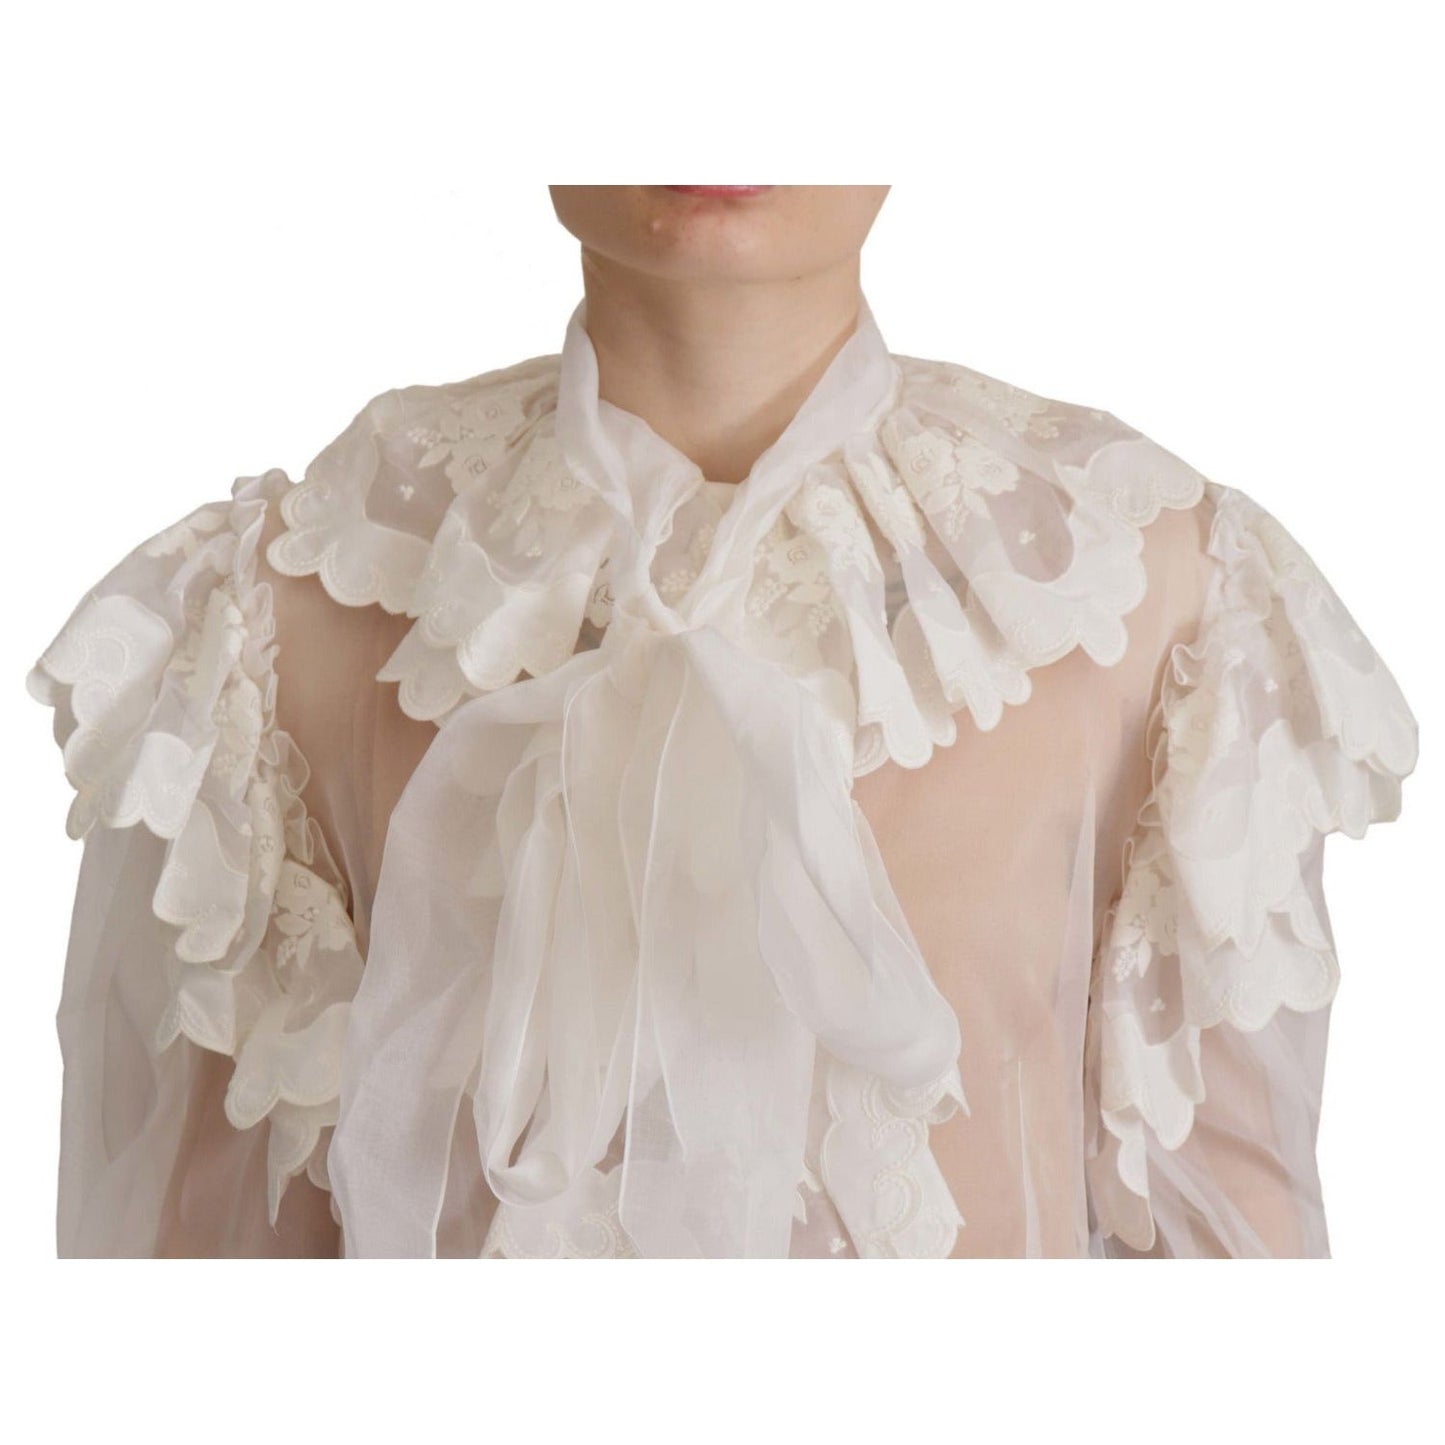 Dolce & Gabbana Elegant White Lace Silk-Cotton Top white-ruffles-lace-long-sleeve-blouse-top